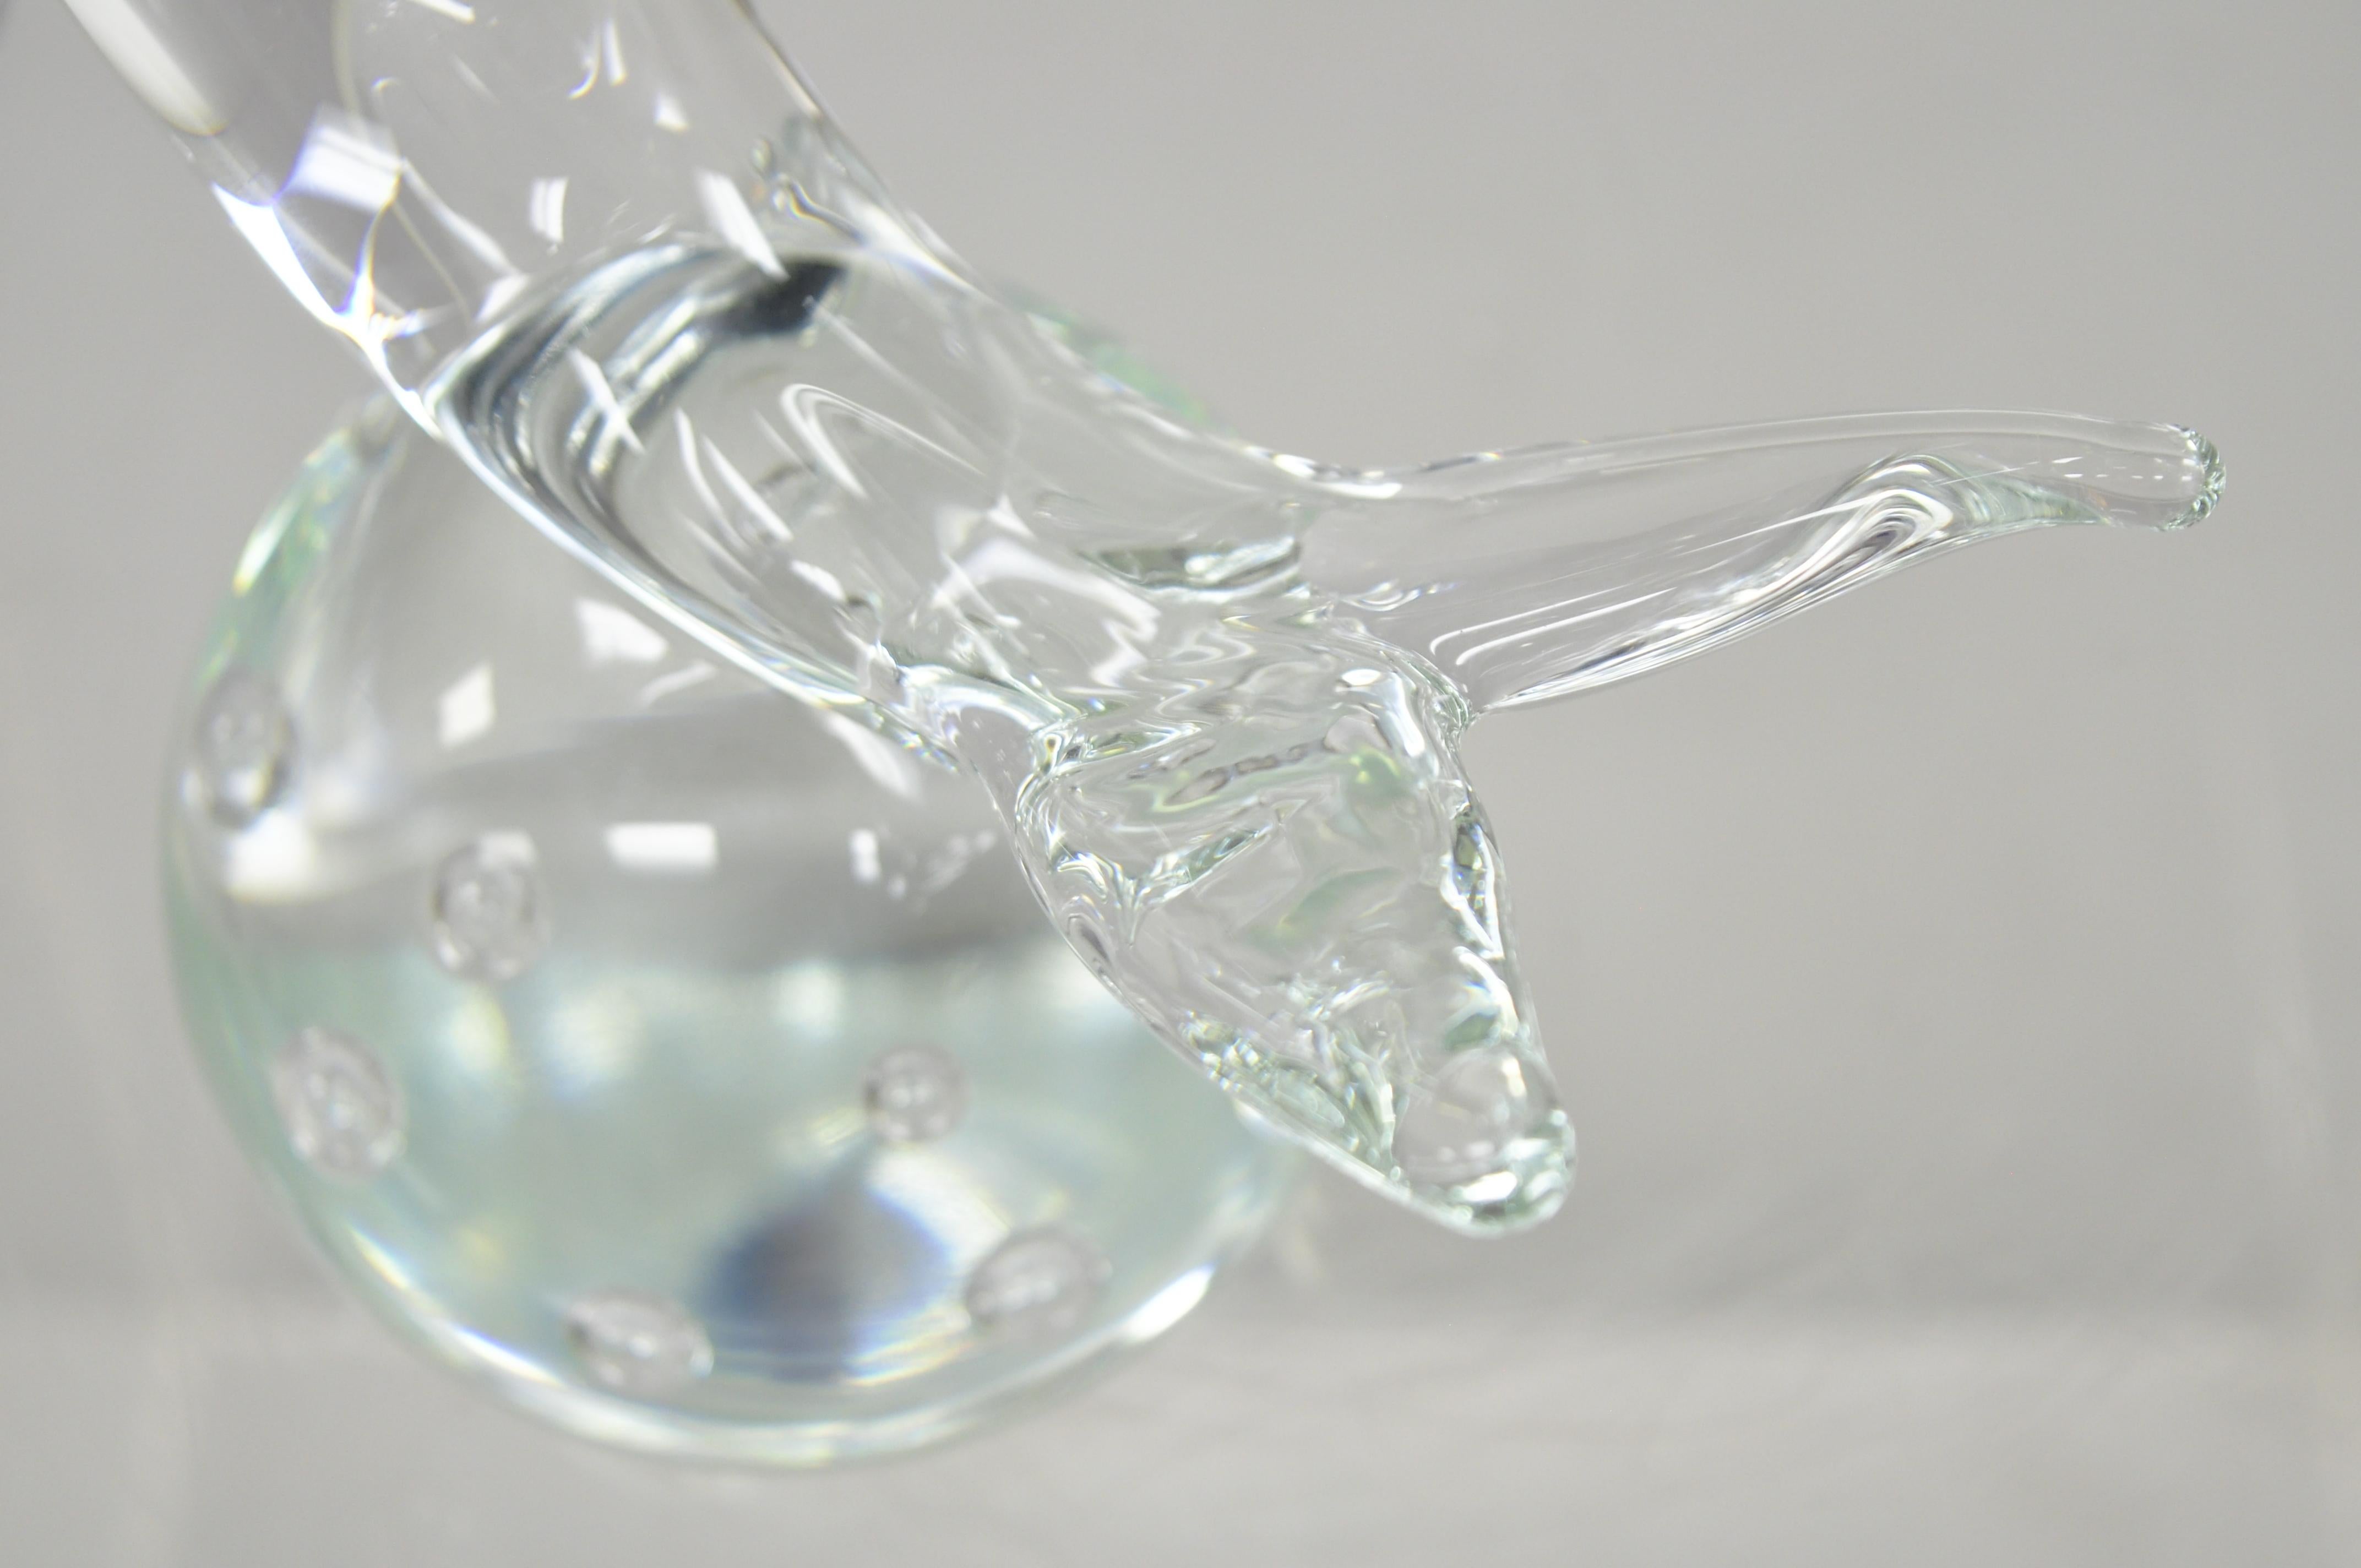 murano dolphin glass sculpture